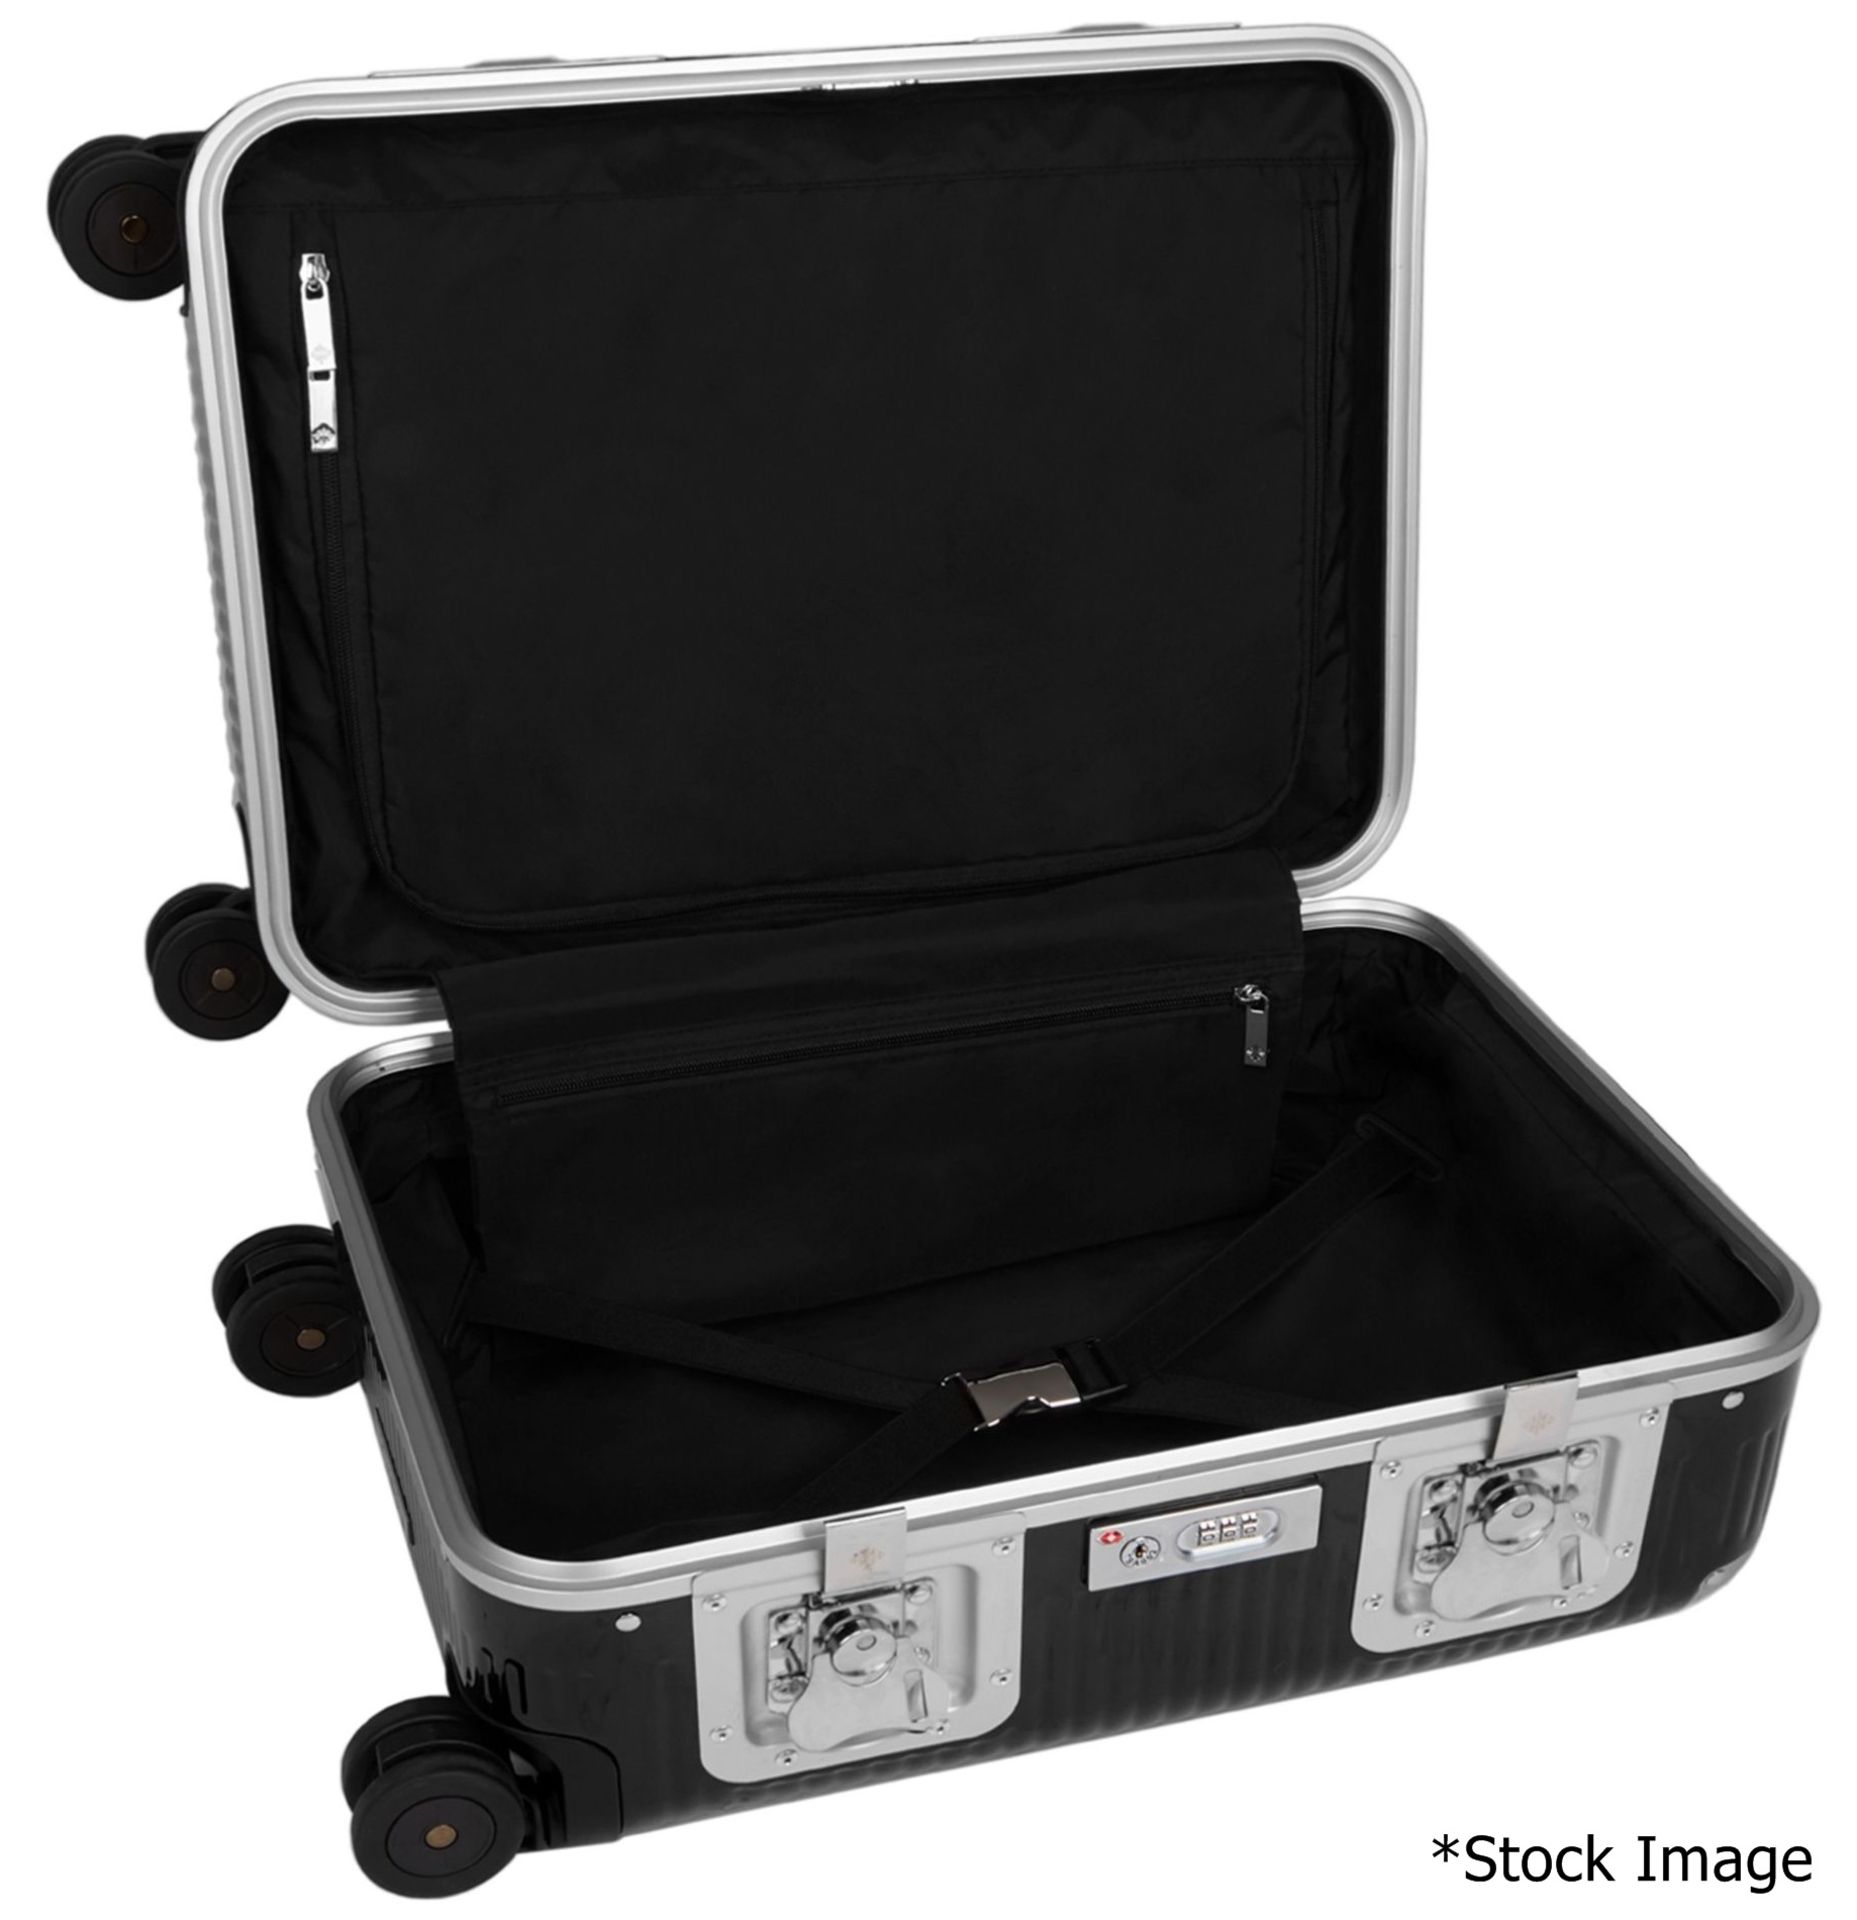 1 x FABBRICA PELLETTERIE MILANO 'Bank' Designer Spinner Light Carry-On Suitcase In Black (55cm) - - Image 2 of 10